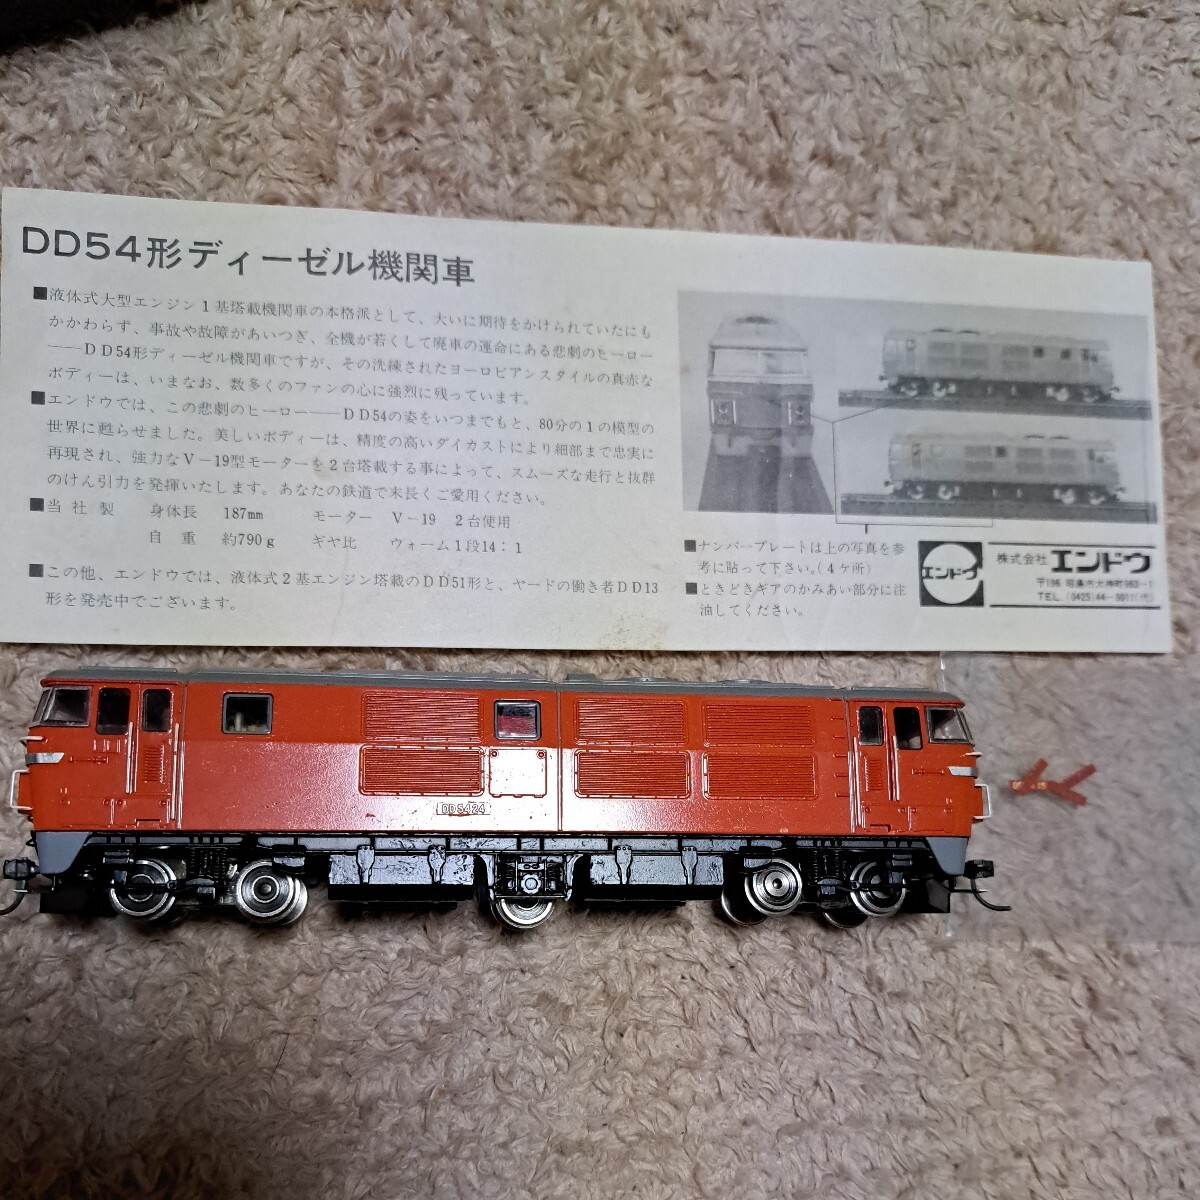 DD54 locomotive HO gauge 